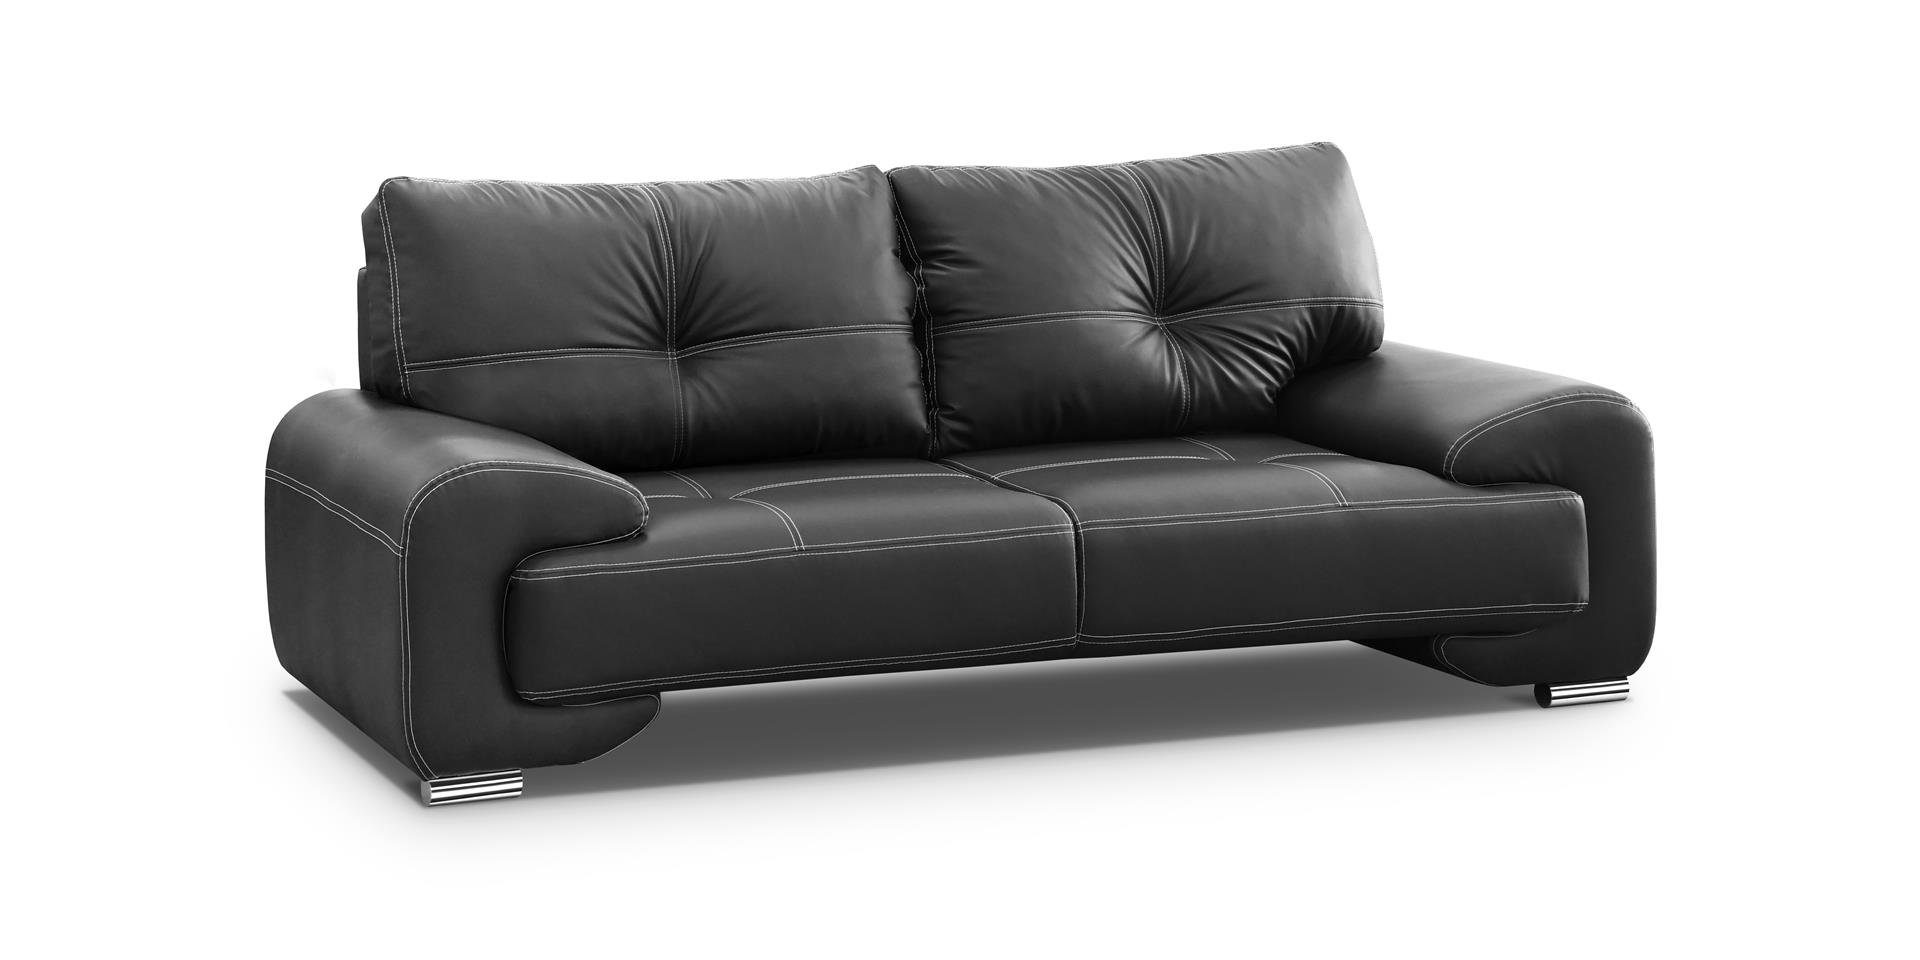 Beautysofa Sofa Dreisitzer Sofa Couch OMEGA Neu Schwarz (dolaro 08) | Alle Sofas